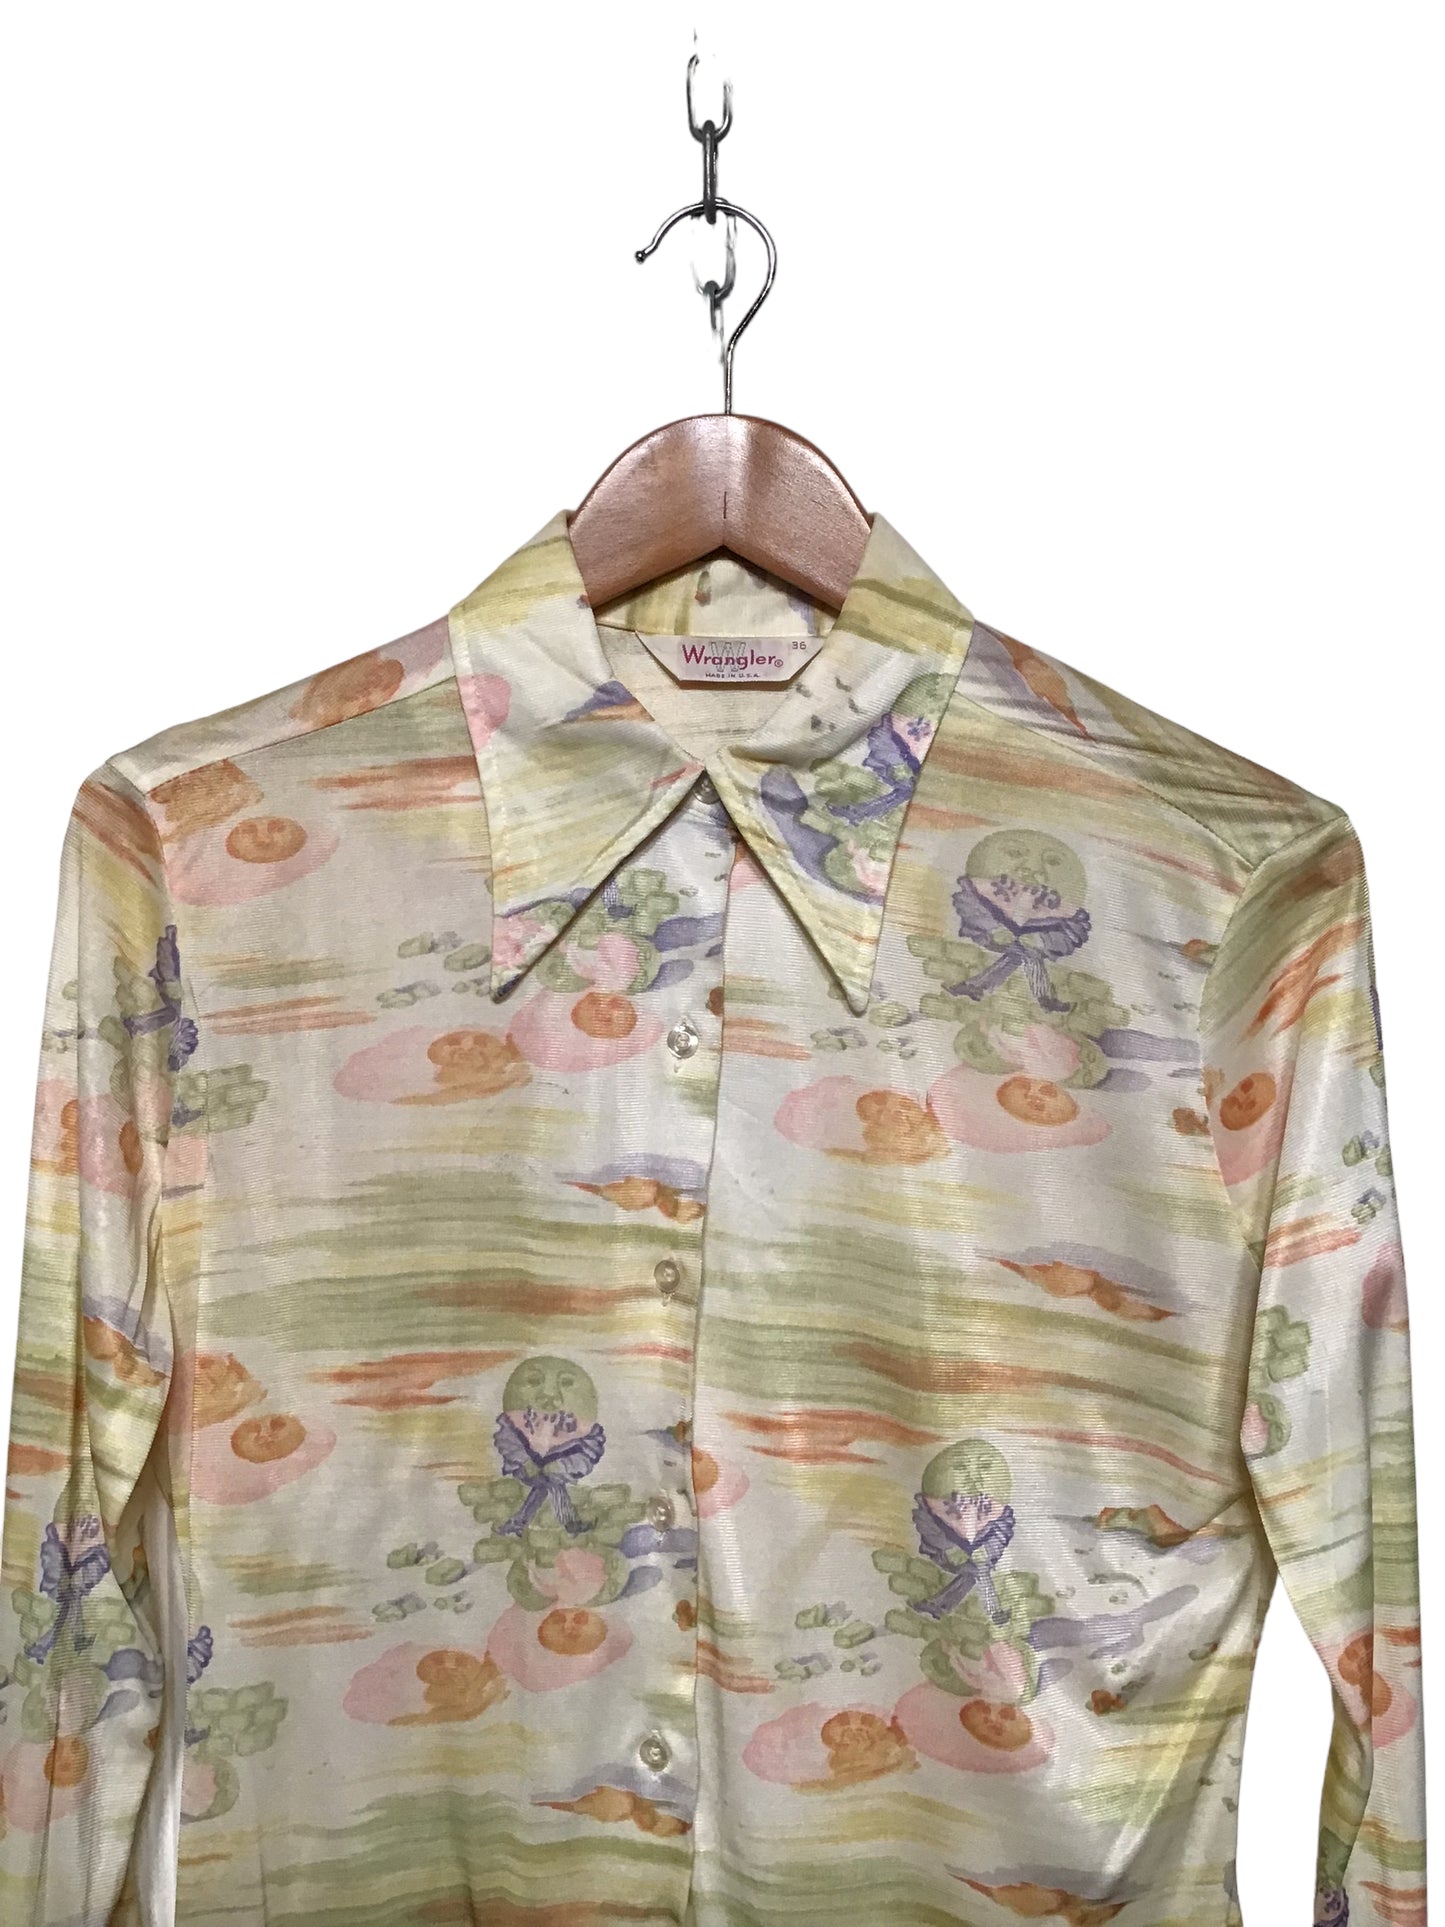 Wrangler Patterned Shirt (Size S)